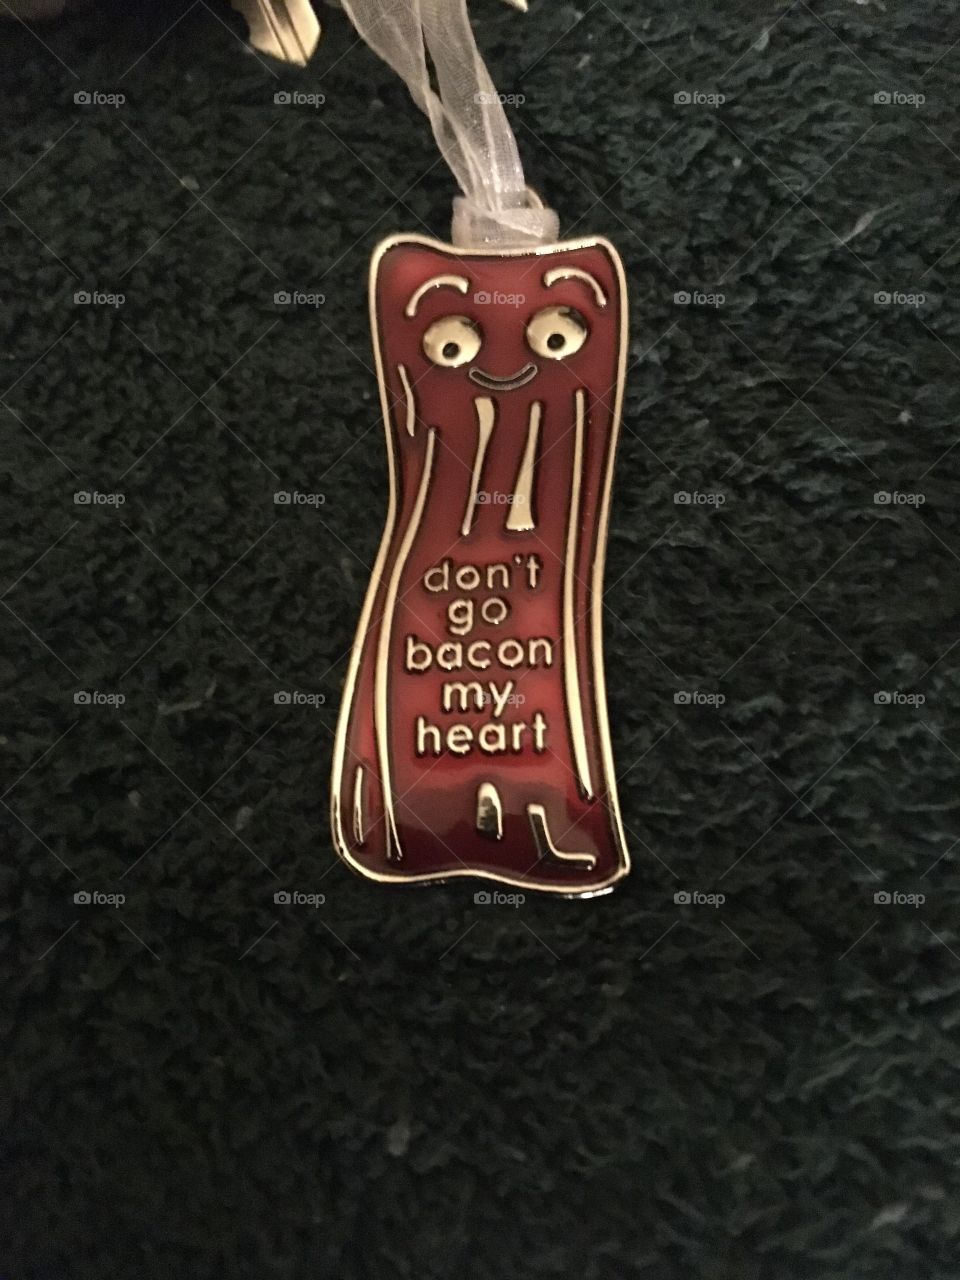 Dong go bacon my heart (keychain)